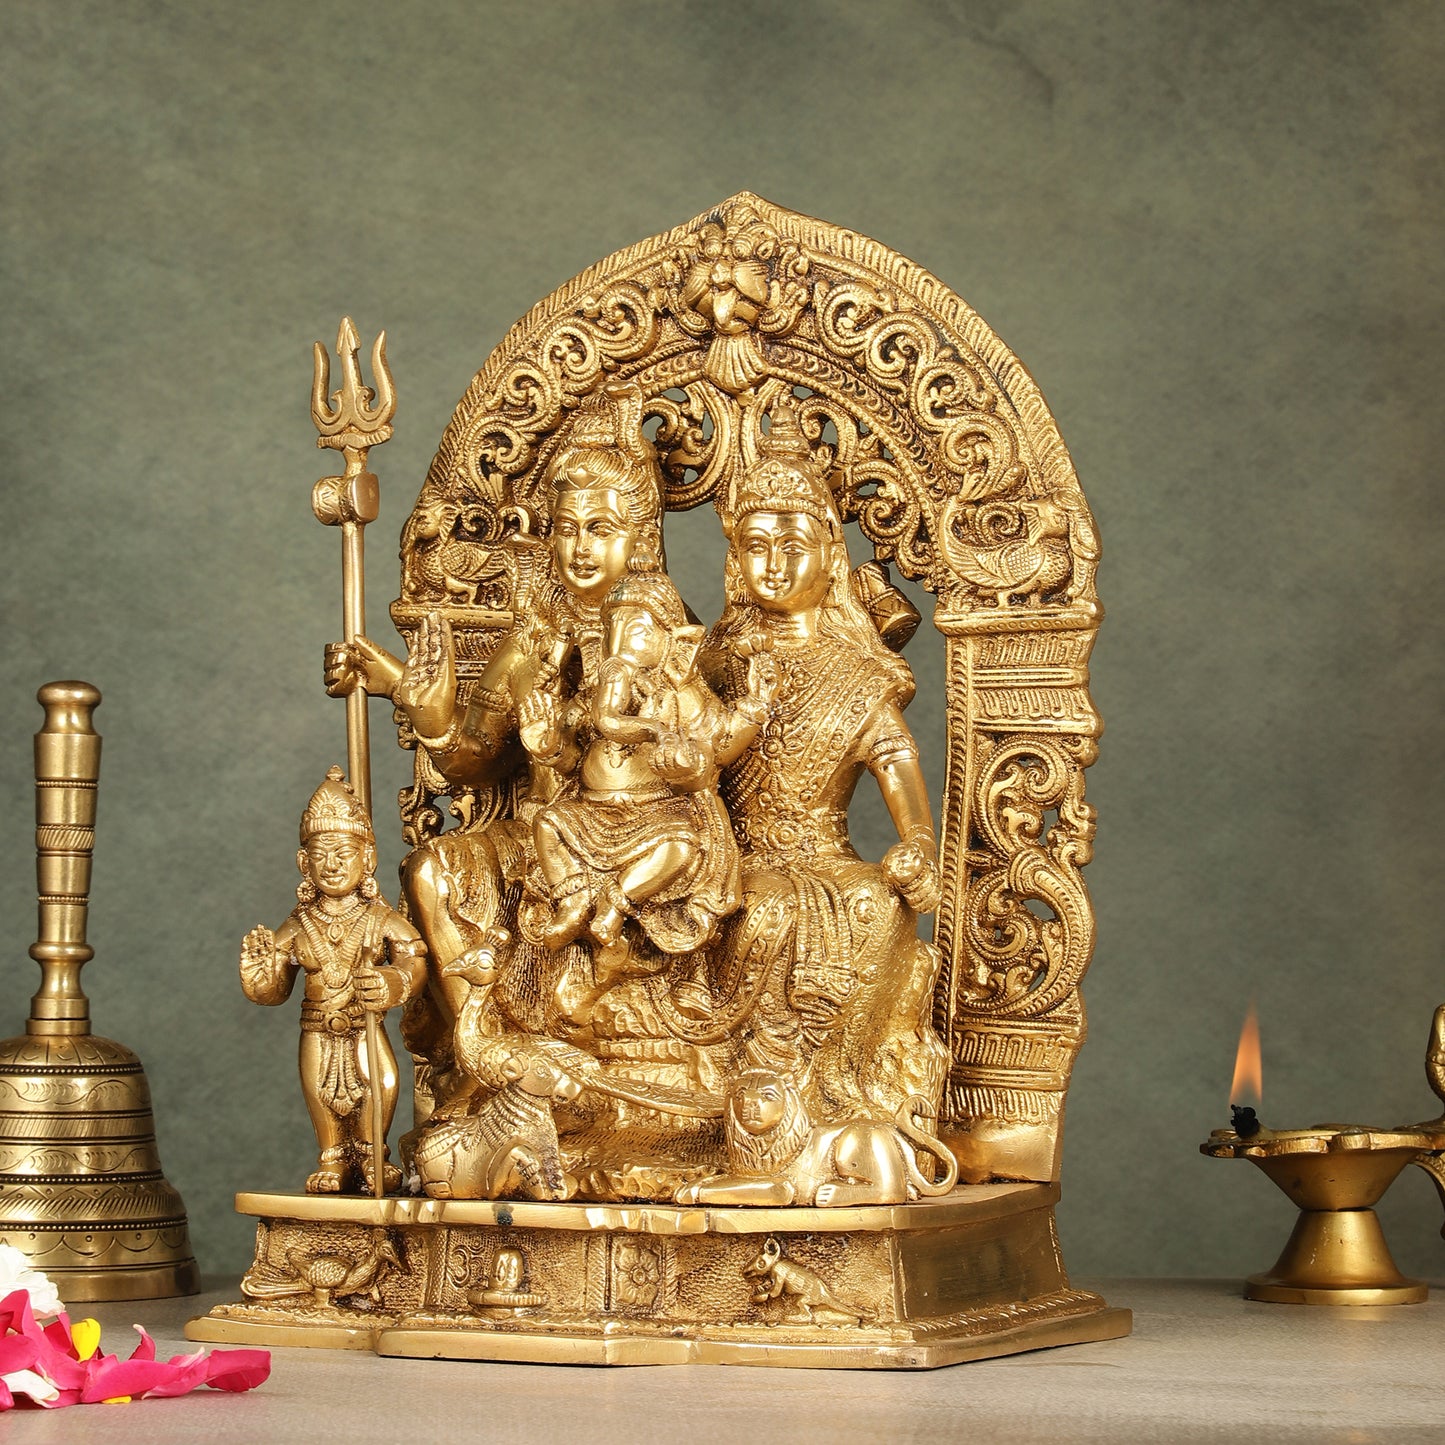 The complete Brass Shiva Parivar Idol 12"